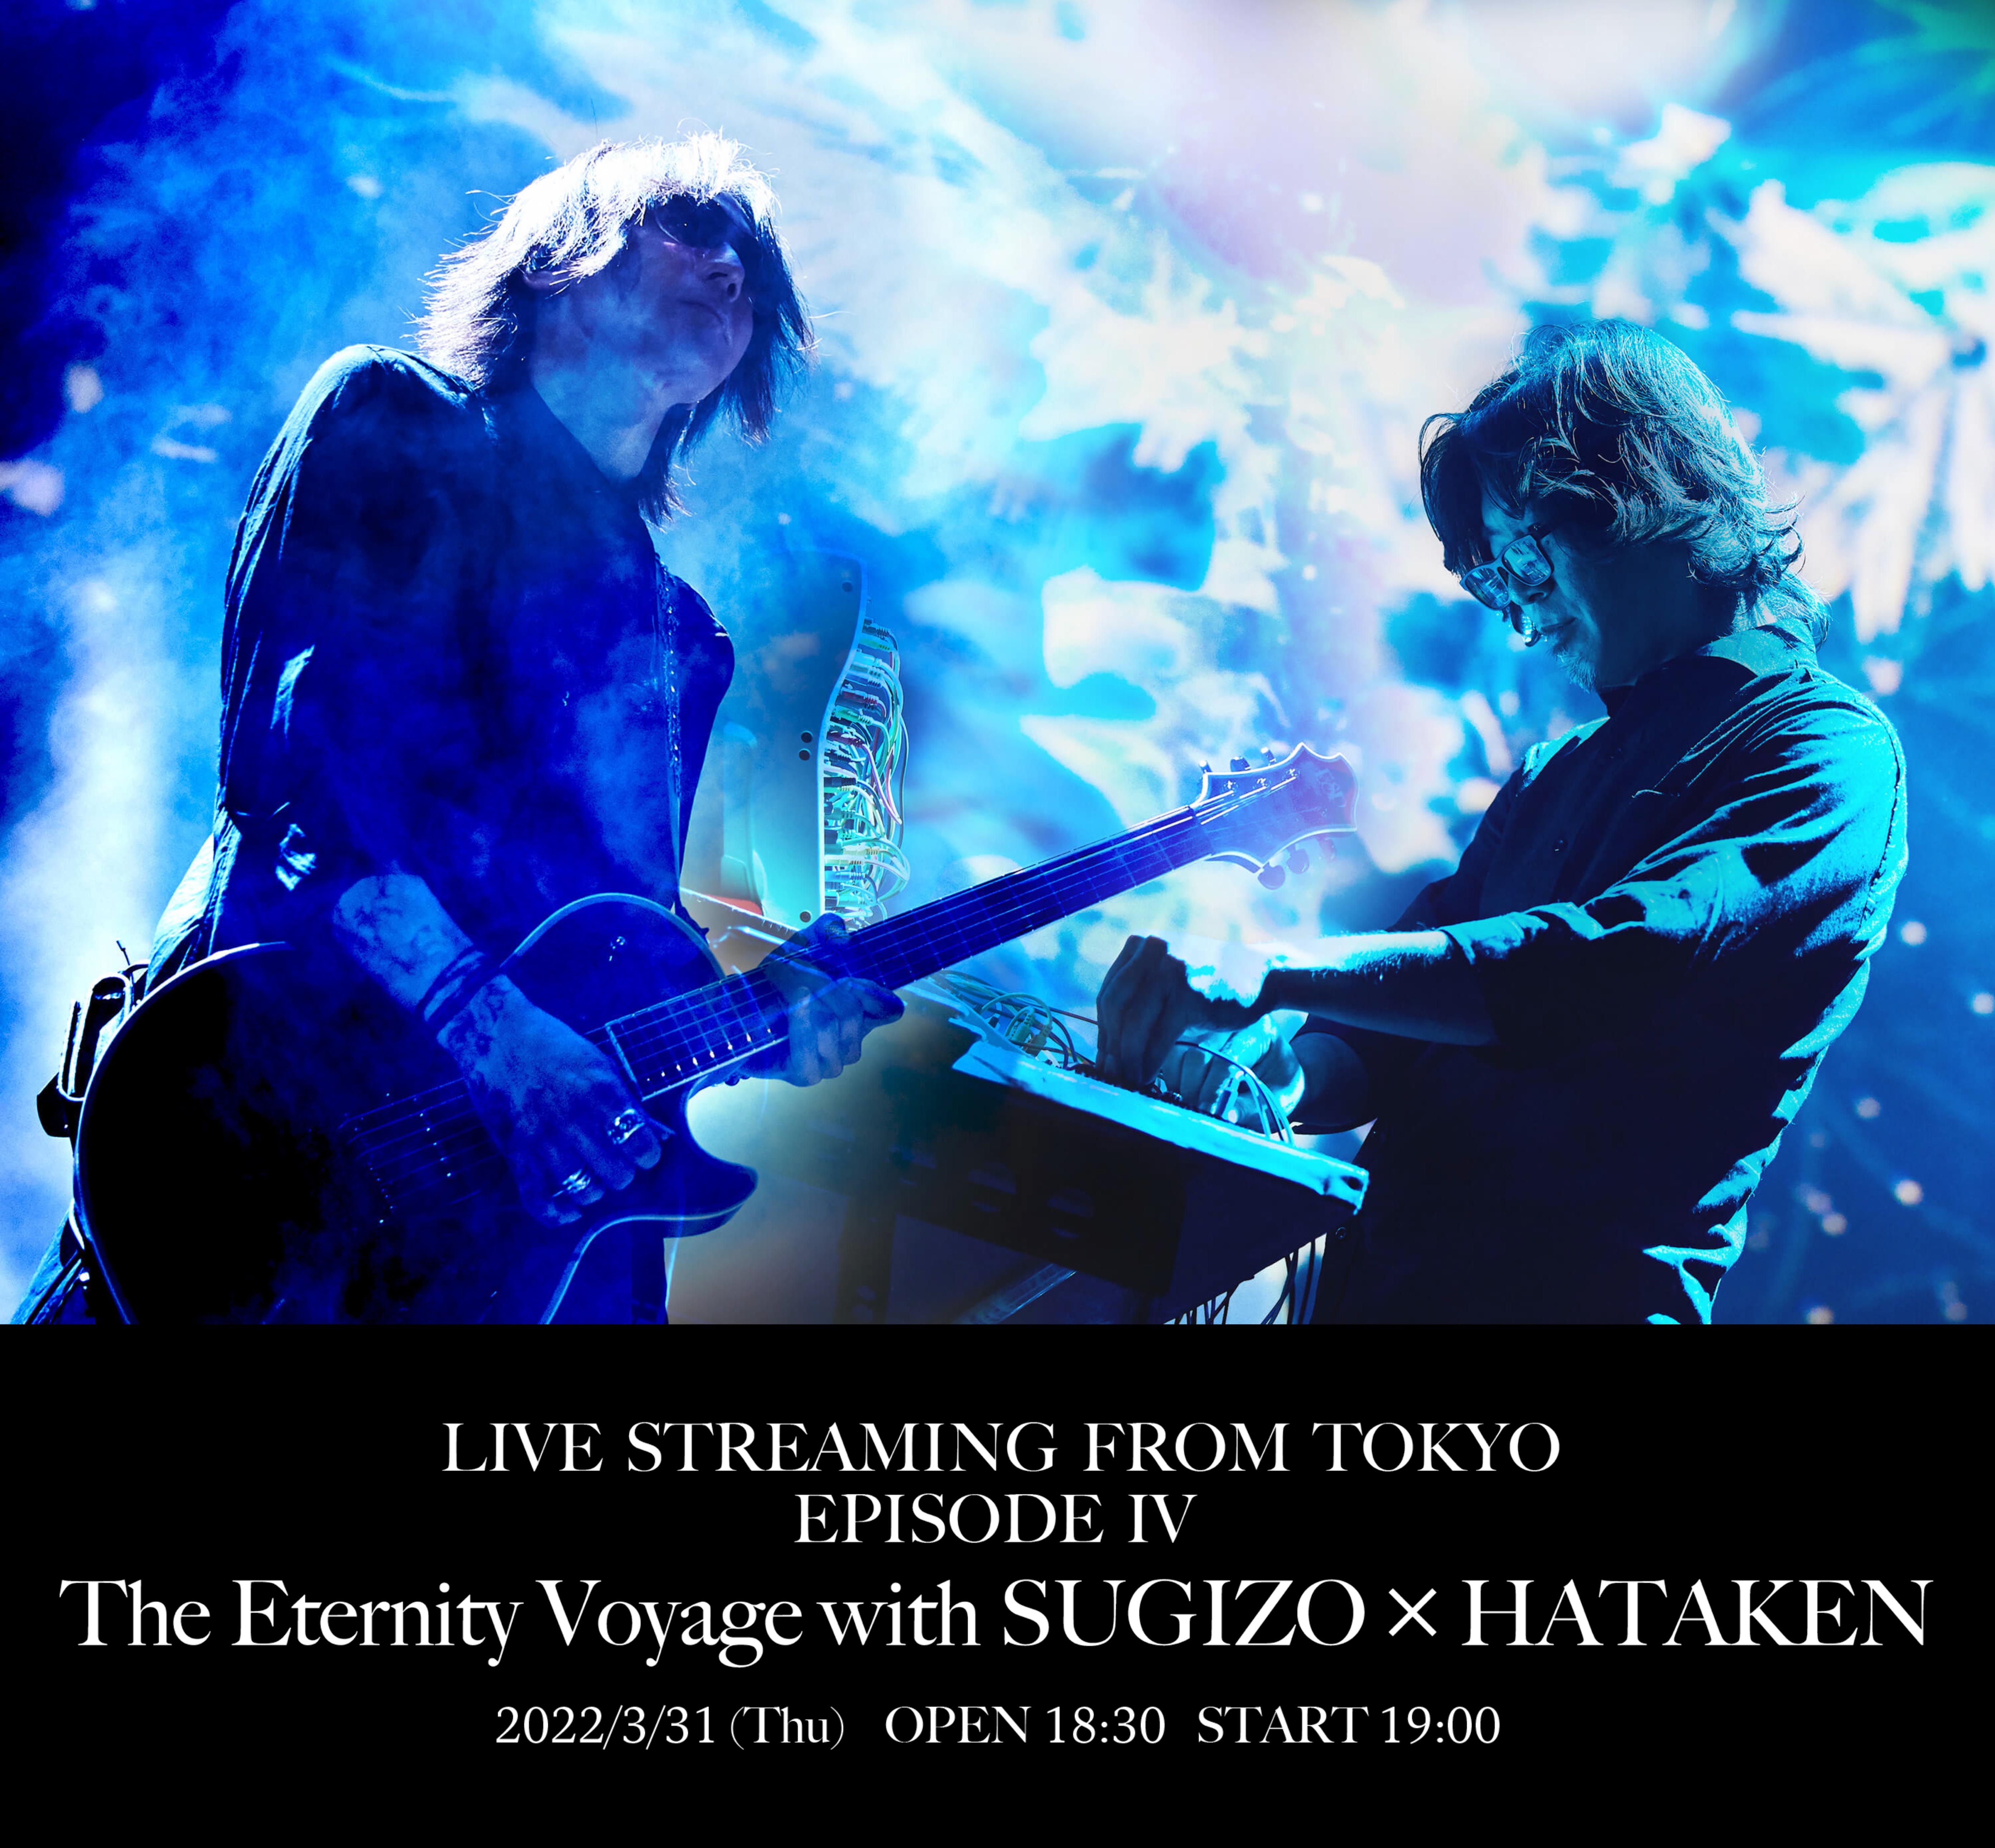 The Eternity Voyage with SUGIZO × HATAKEN